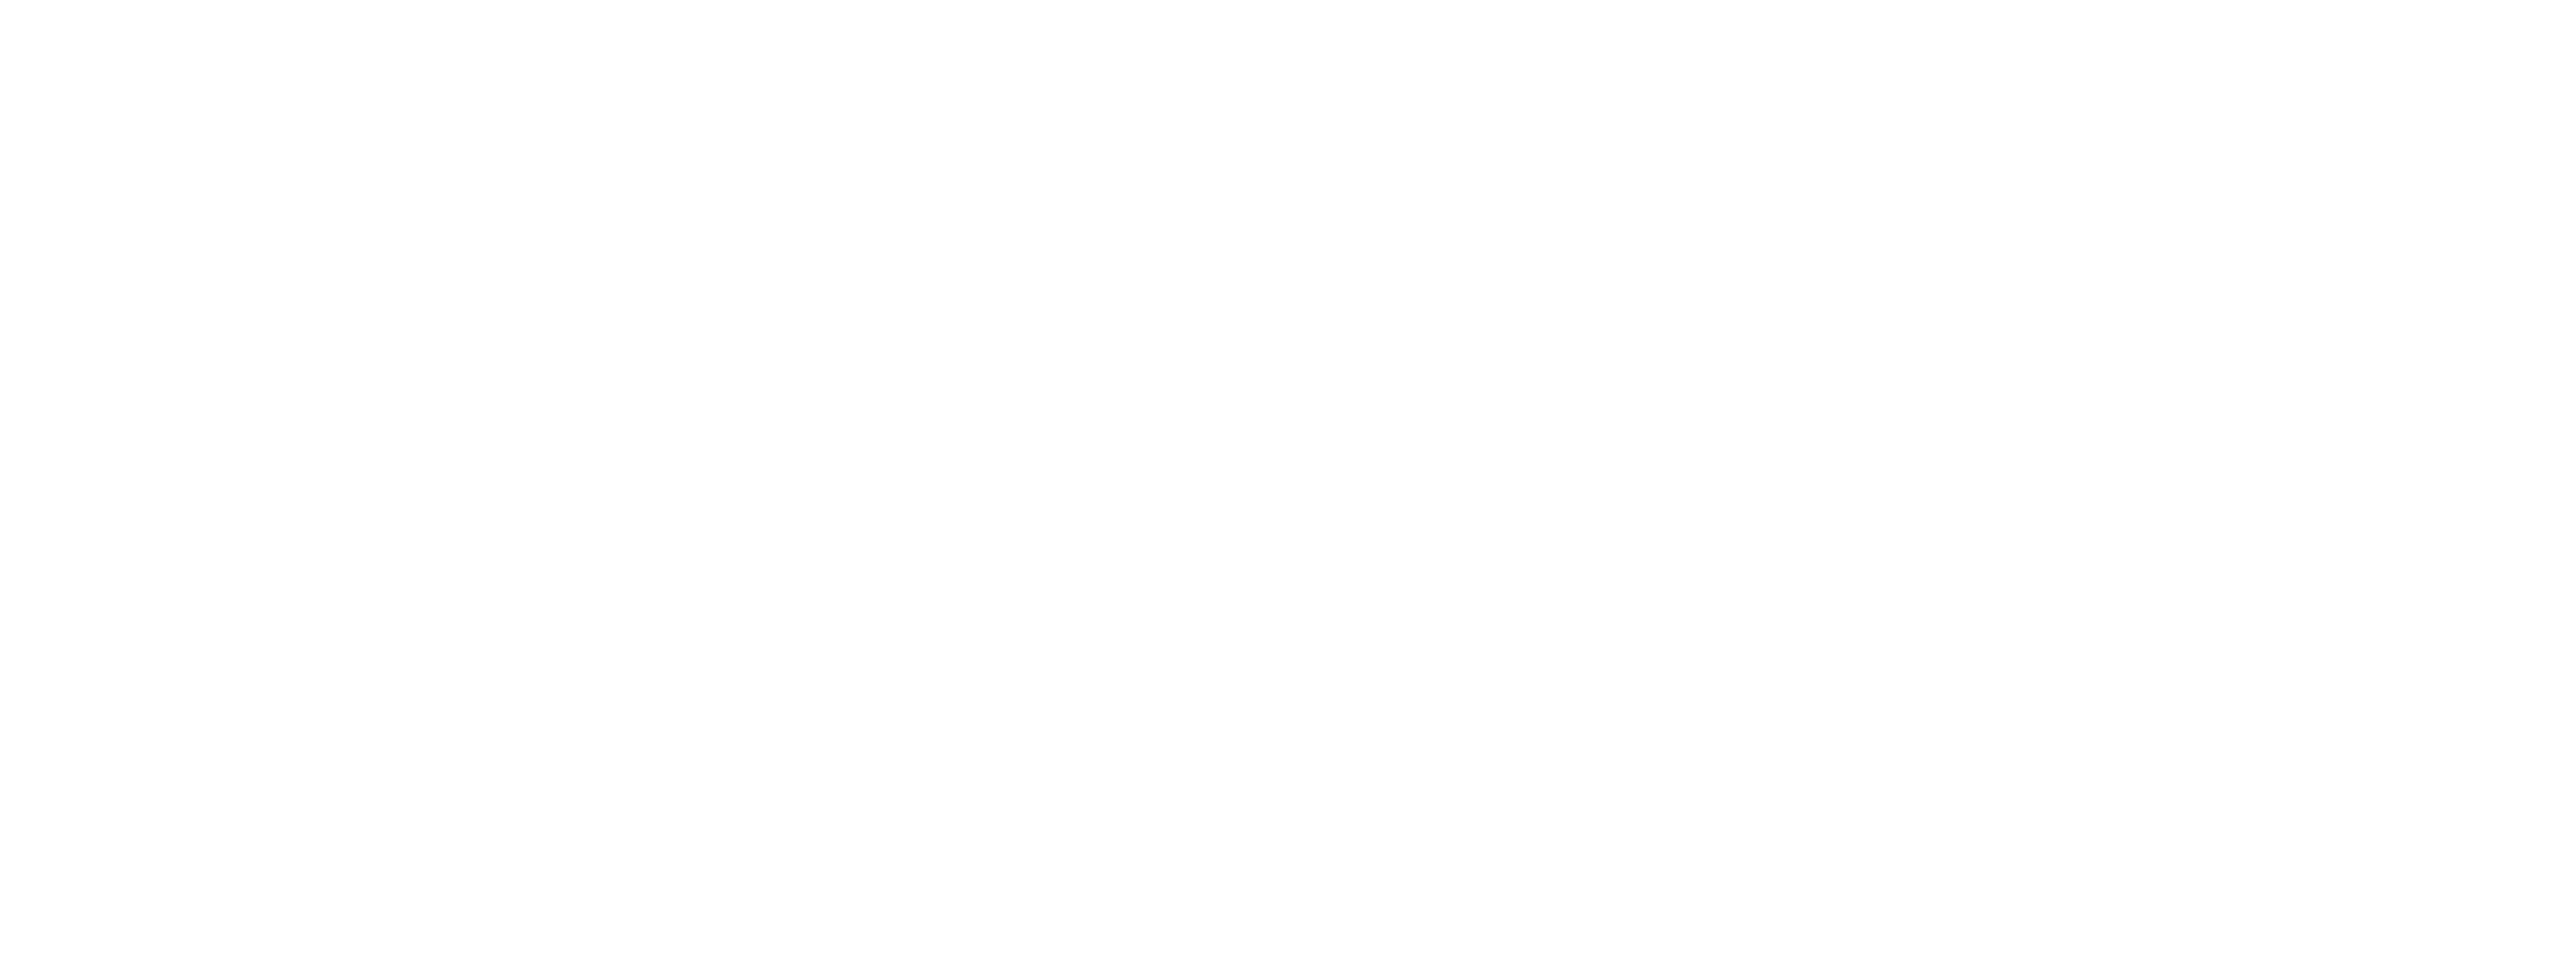 Decorating Den Interiors logo black